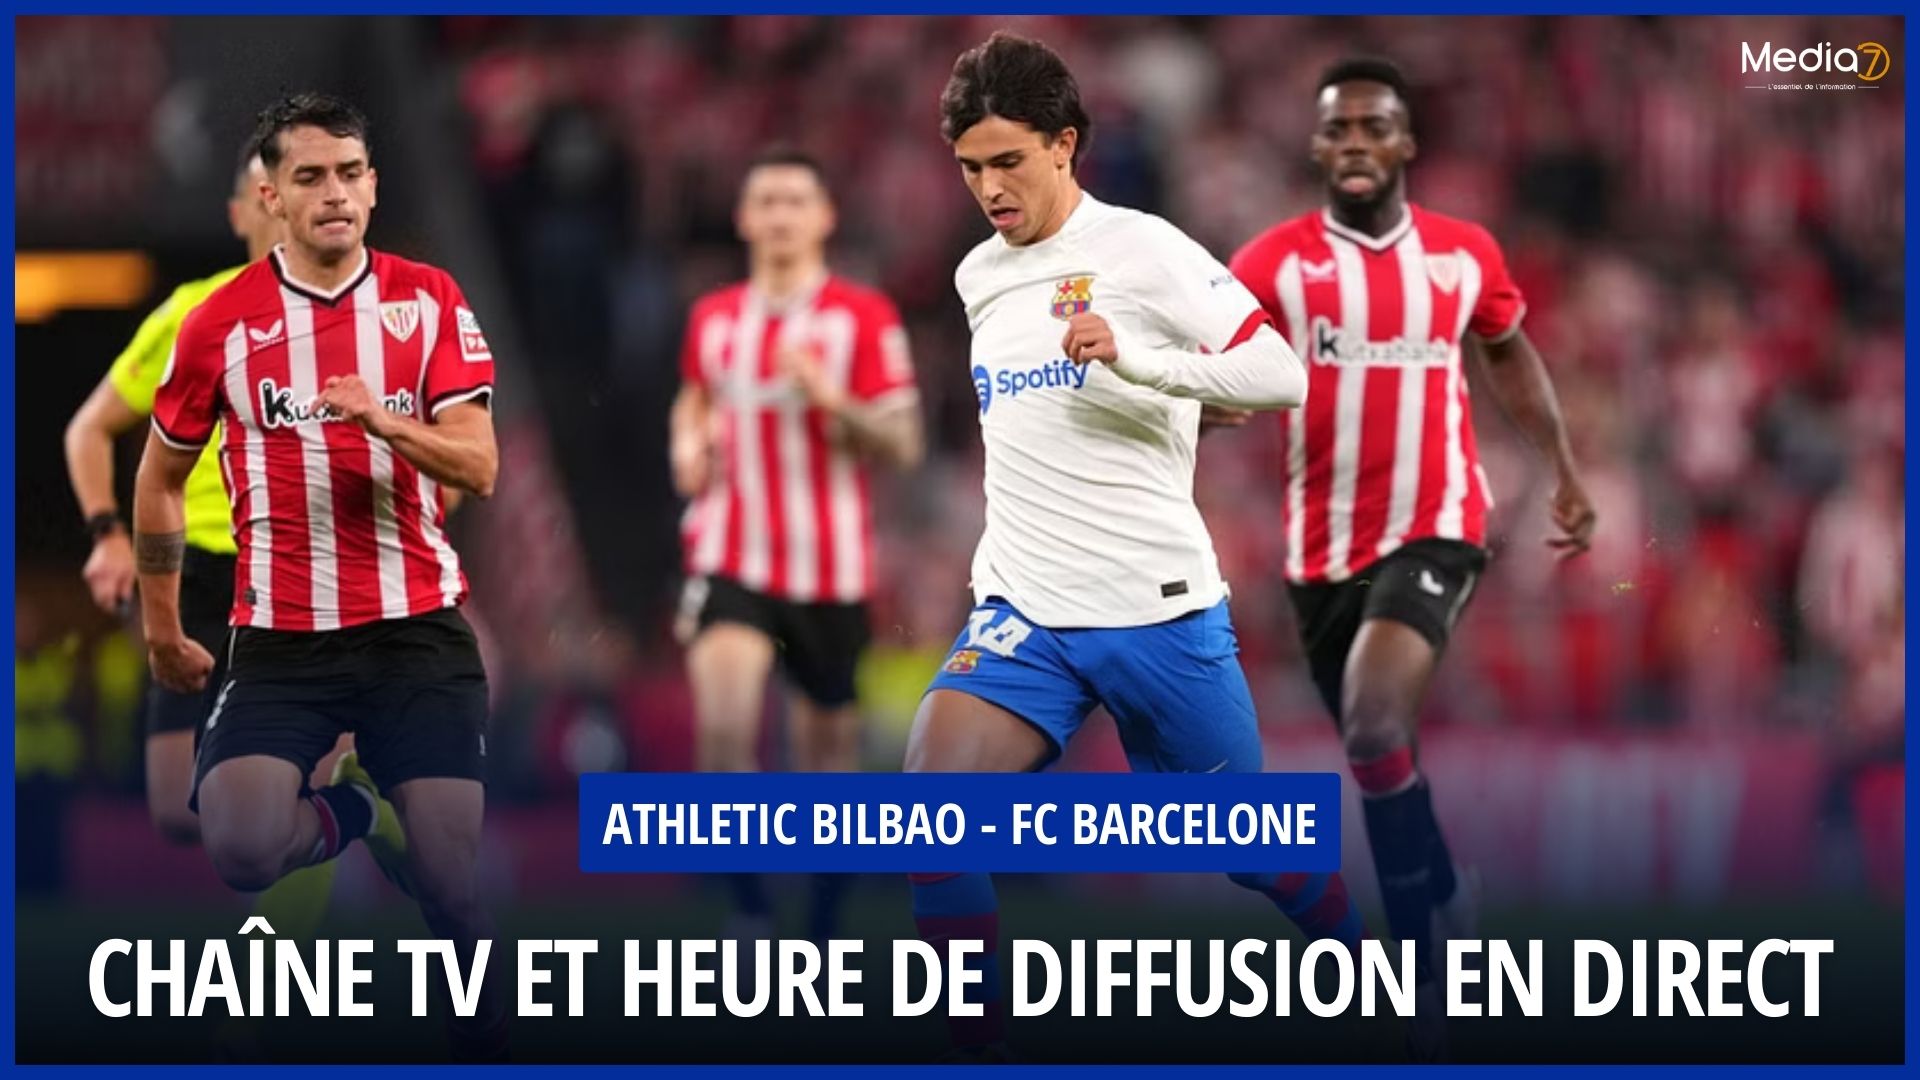 Athletic Bilbao - FC Barcelona Match Live: TV Program and Broadcast Schedule - Media7